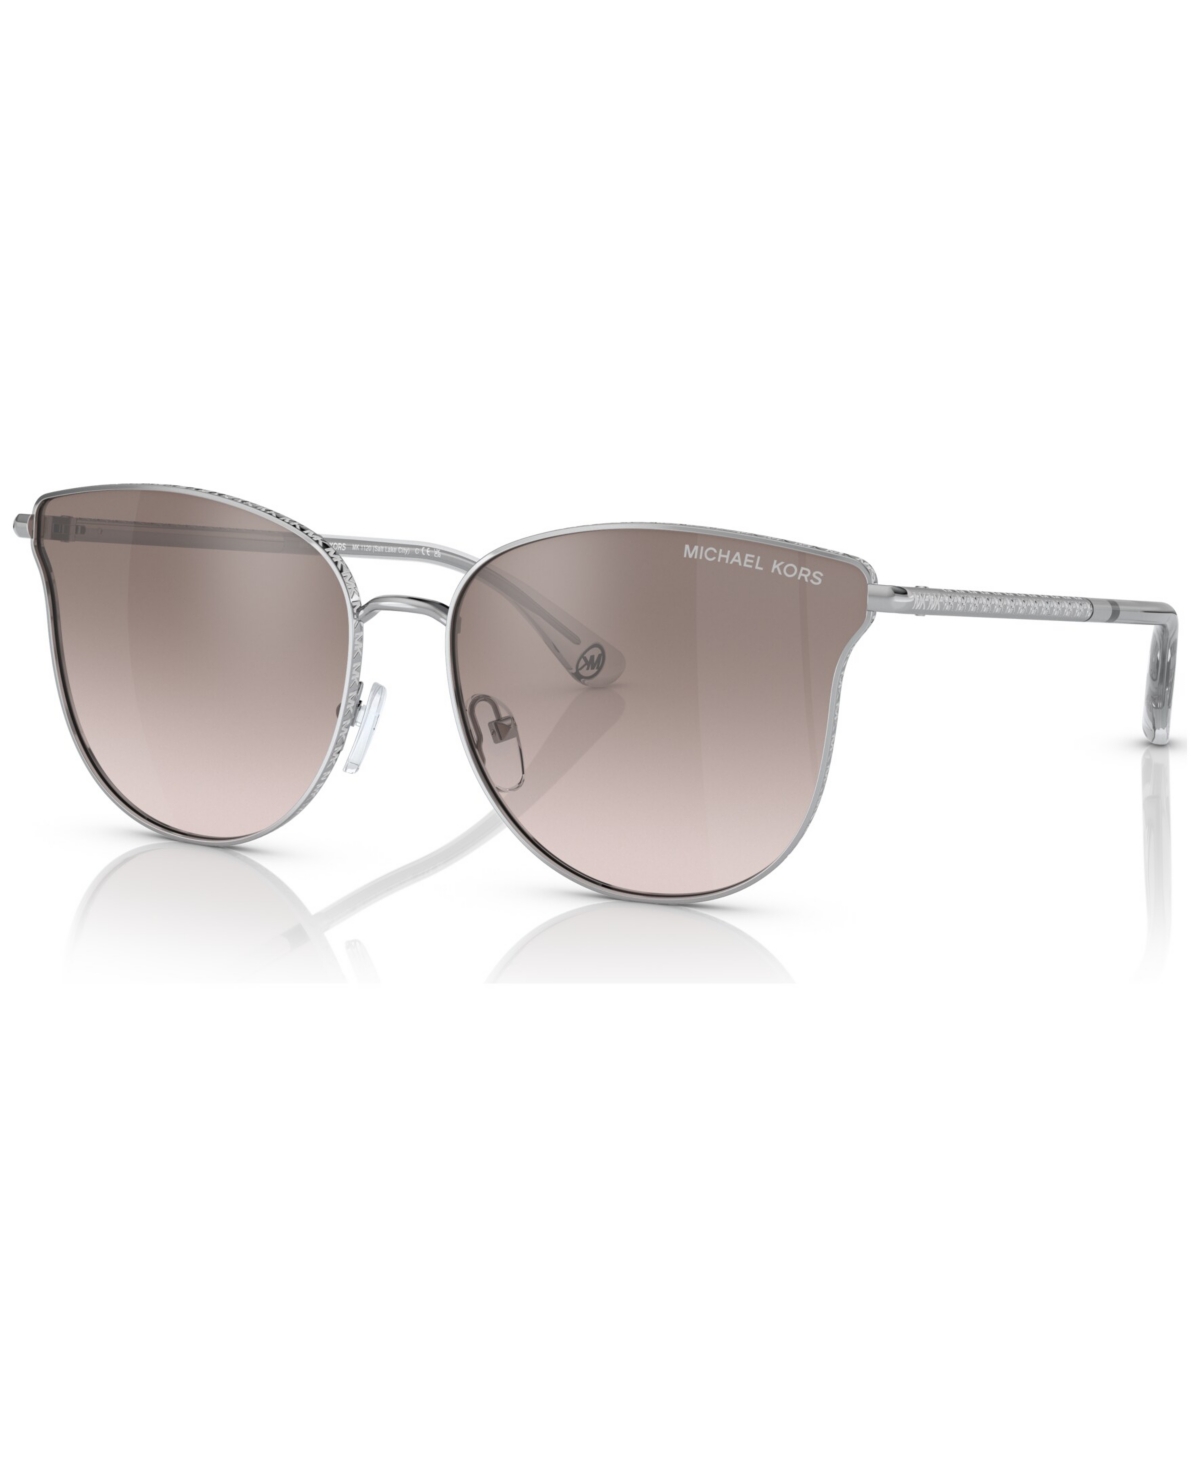 Michael Kors Women's Sunglasses, Mk1120 In Silver-tone